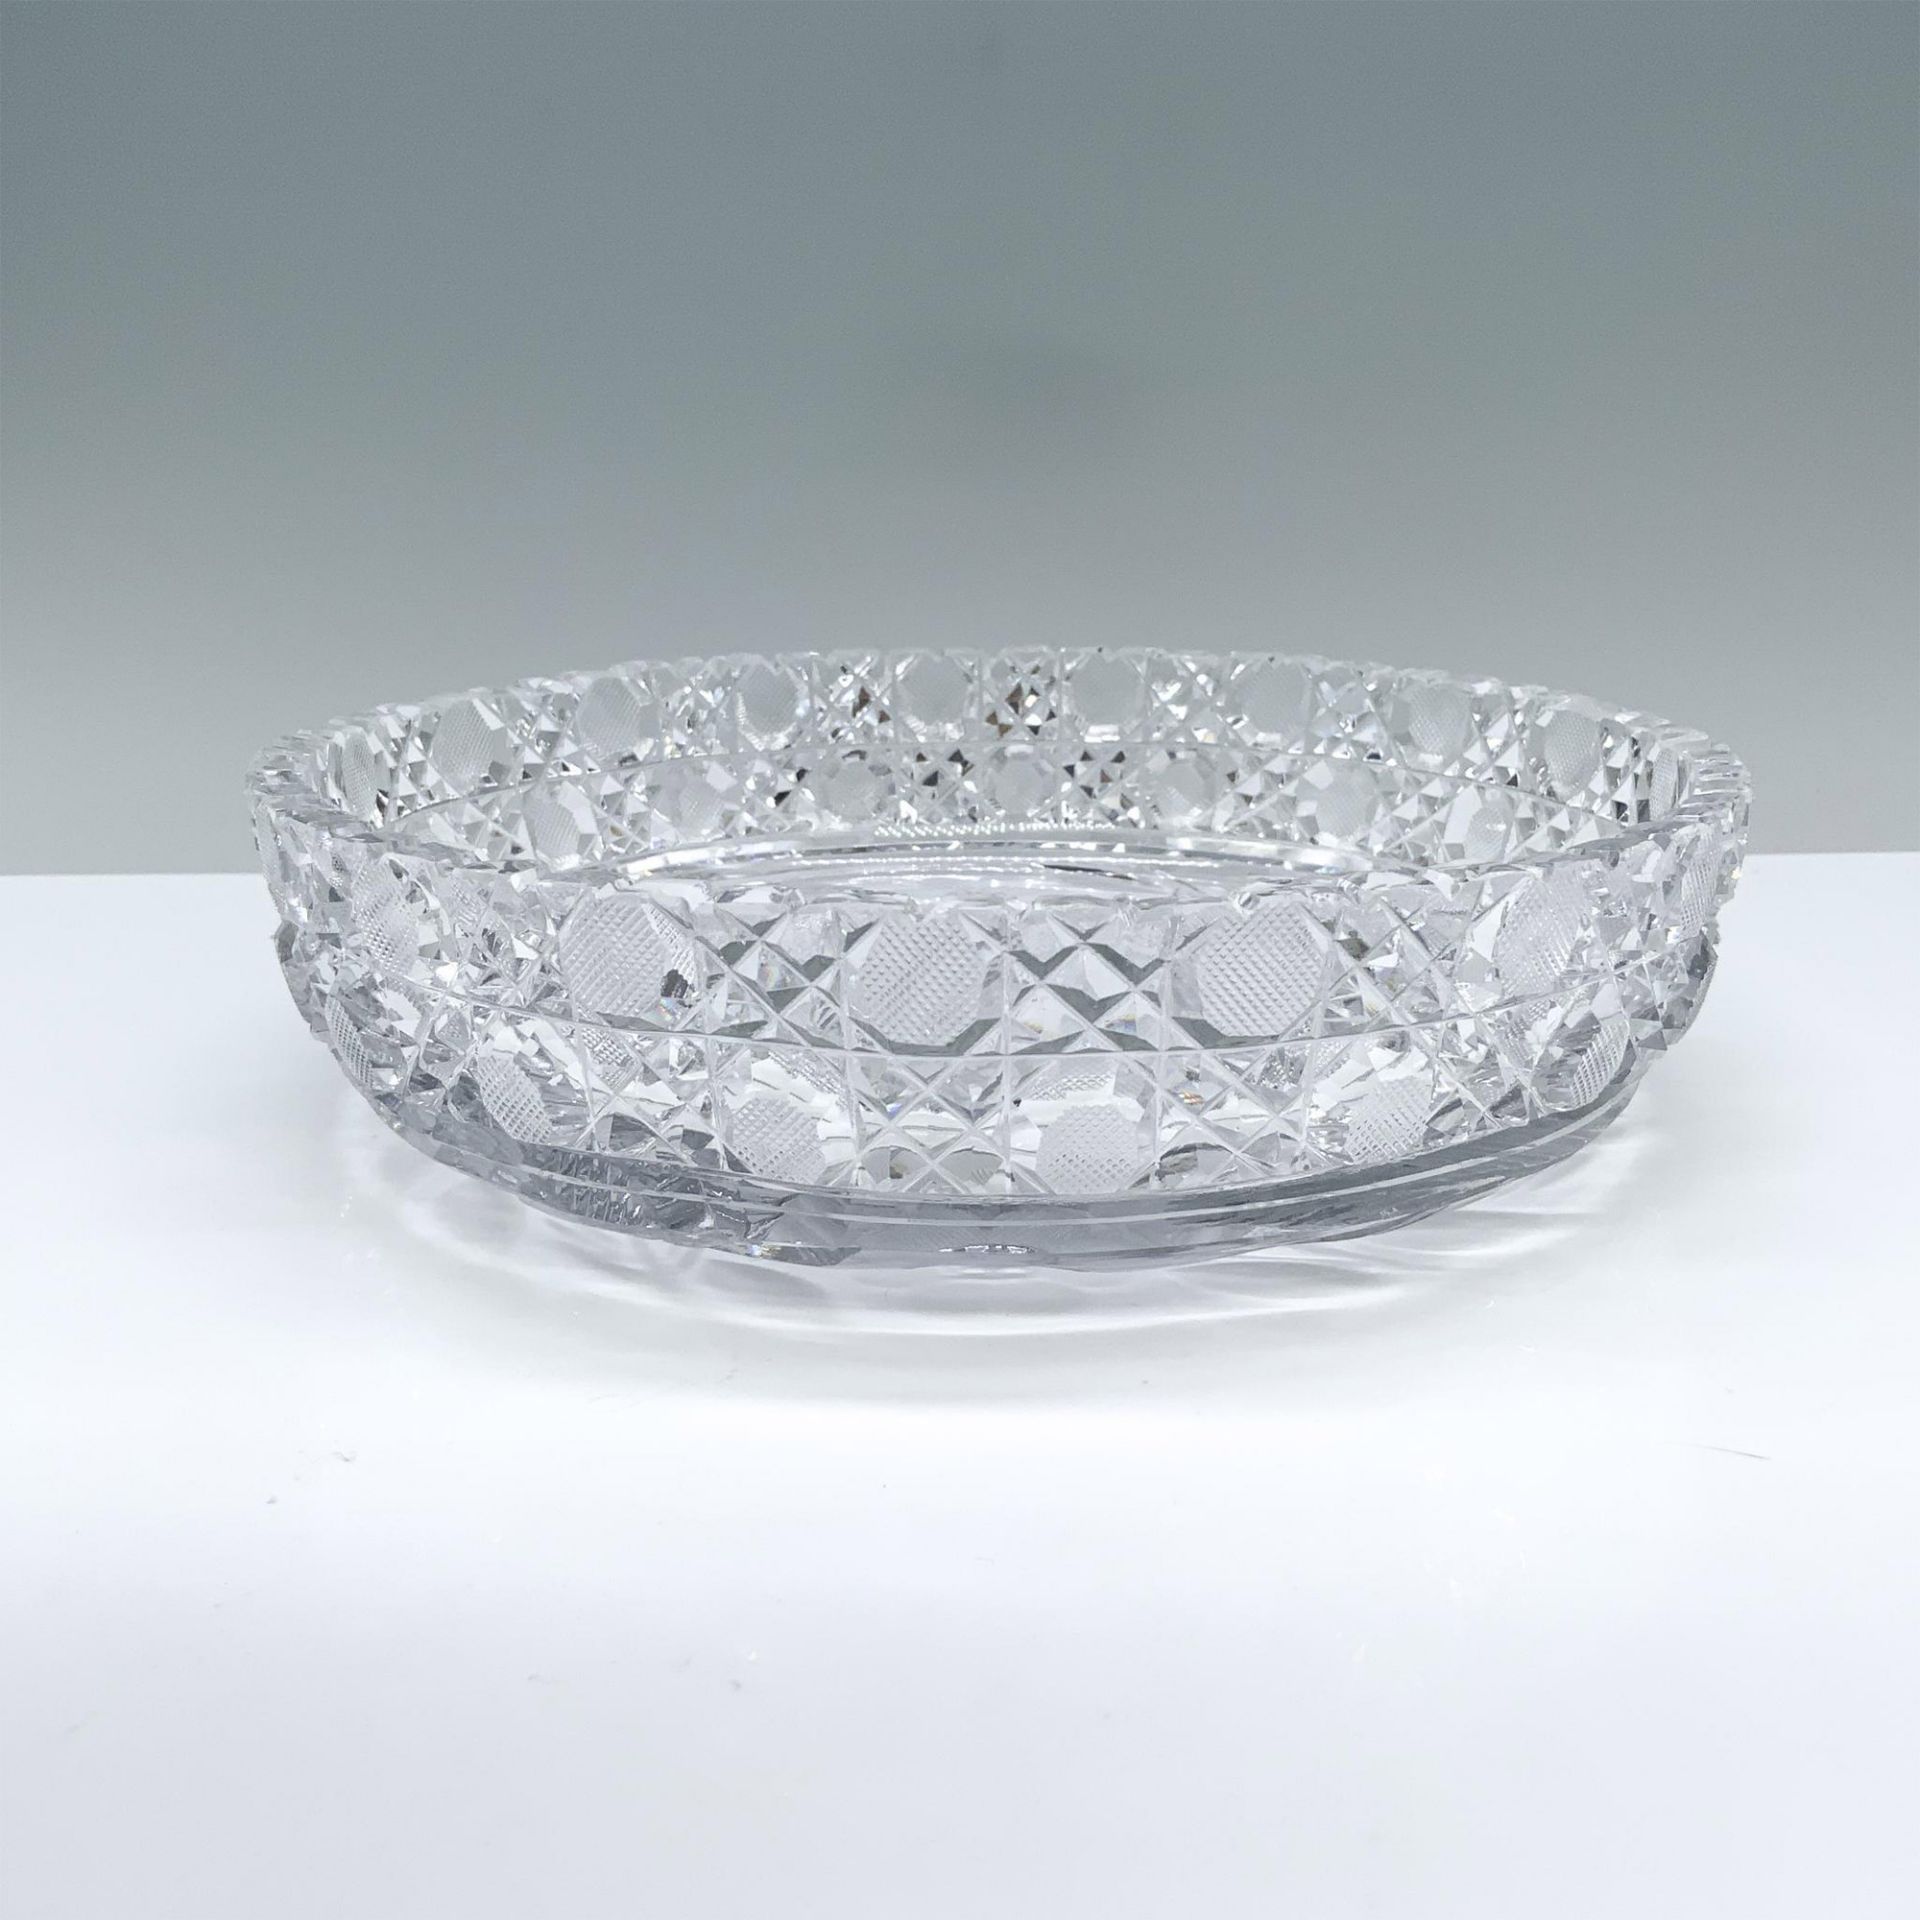 Crystal Floral Themed Serving Bowl